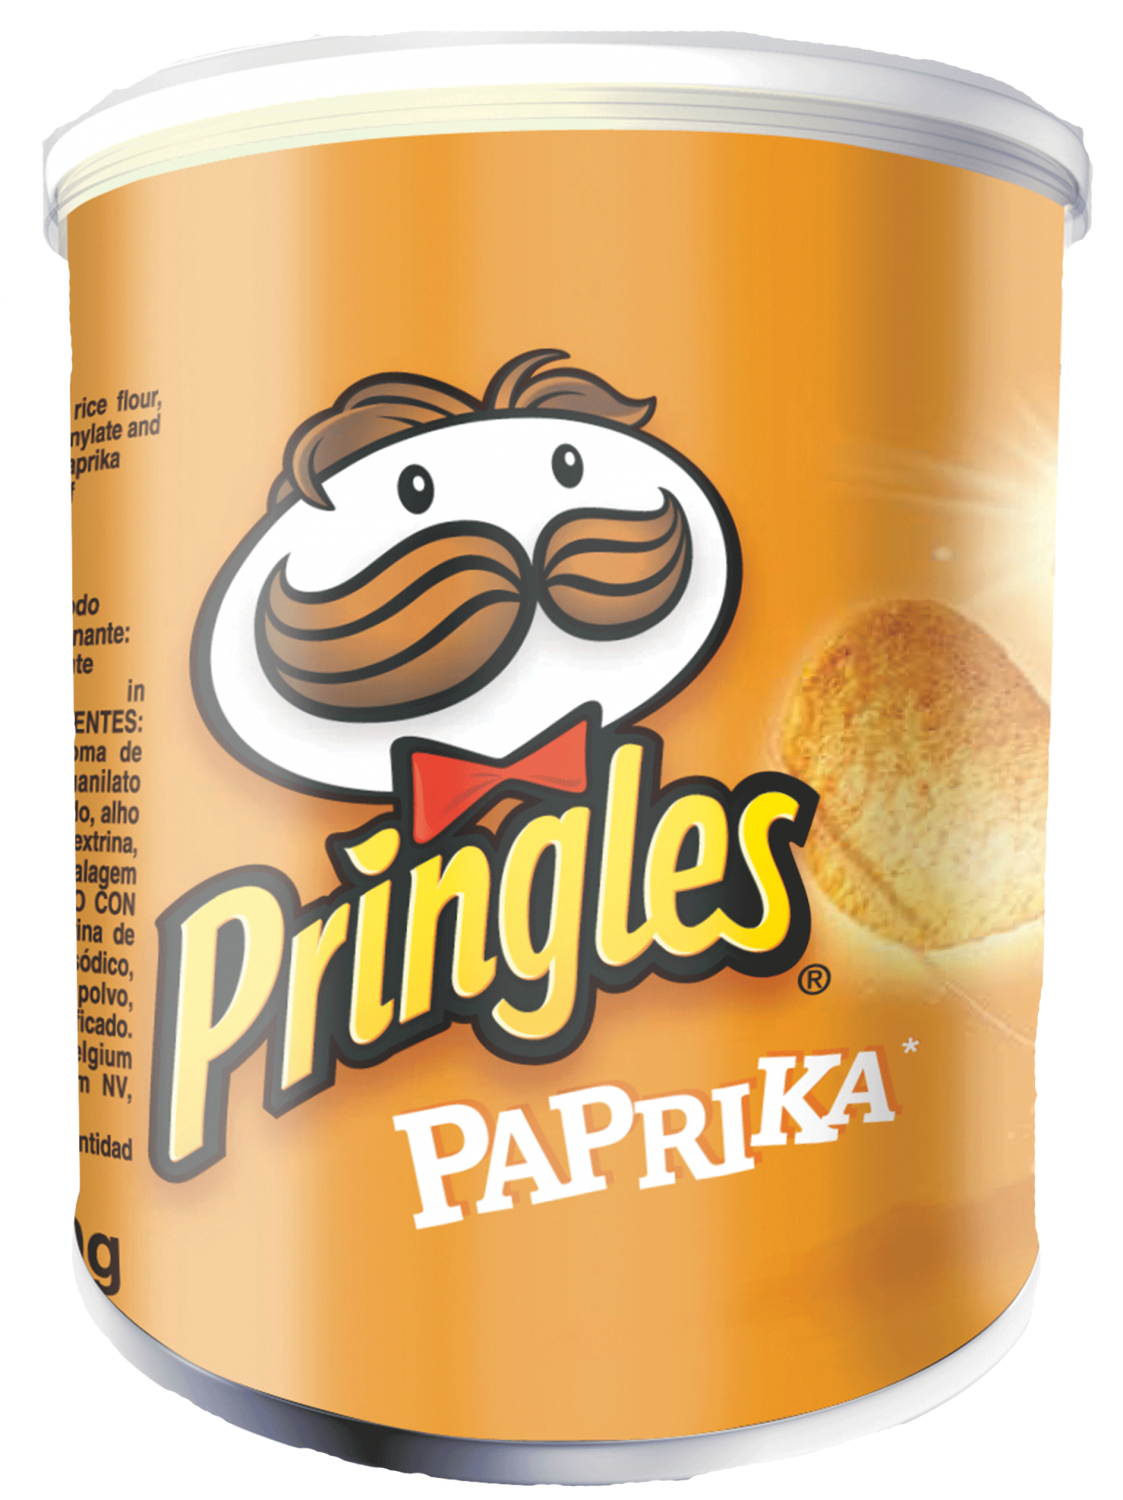 Pringles Paprika PNG Images Transparent Background - PNG Play